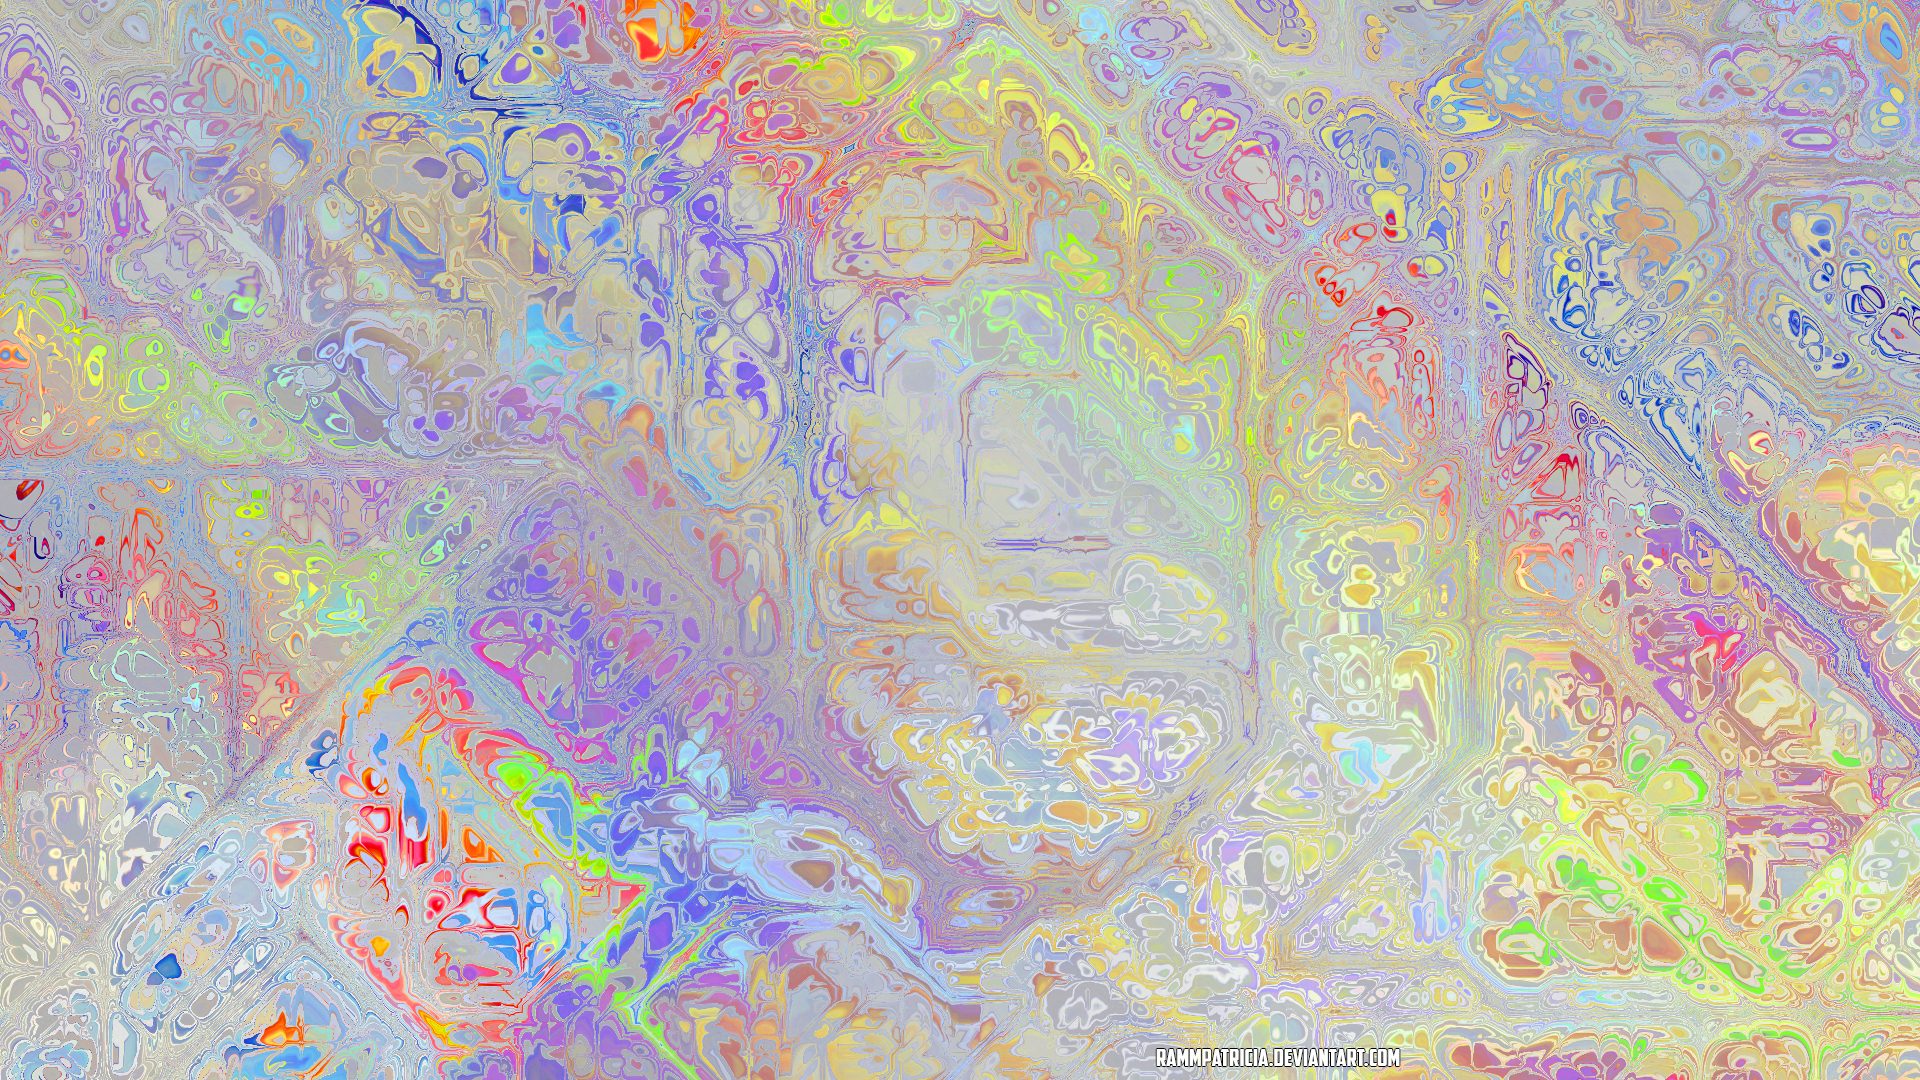 RammPatricia Abstract Digital Art Colorful Iridescent 1920x1080